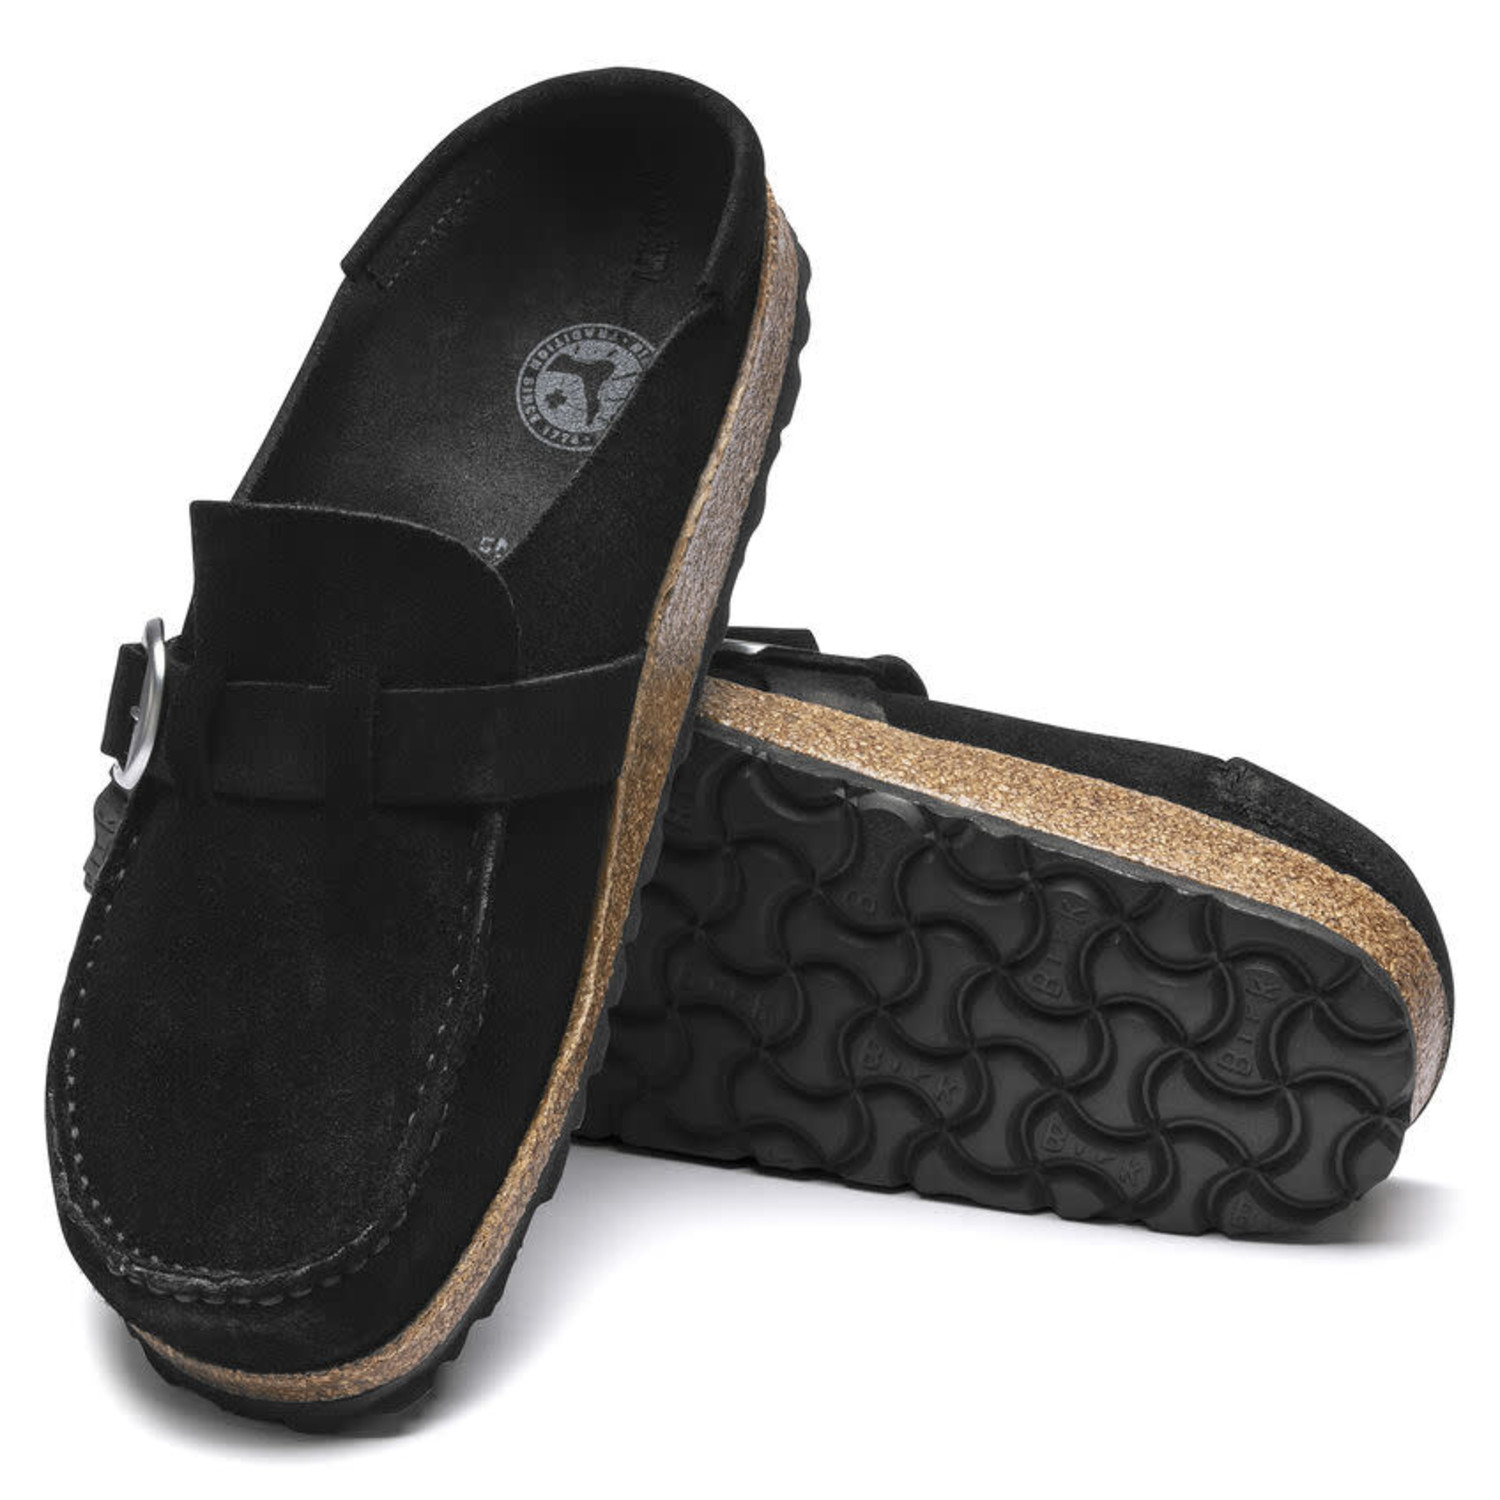 Buckley - Black Narrow - Gentry's Footwear